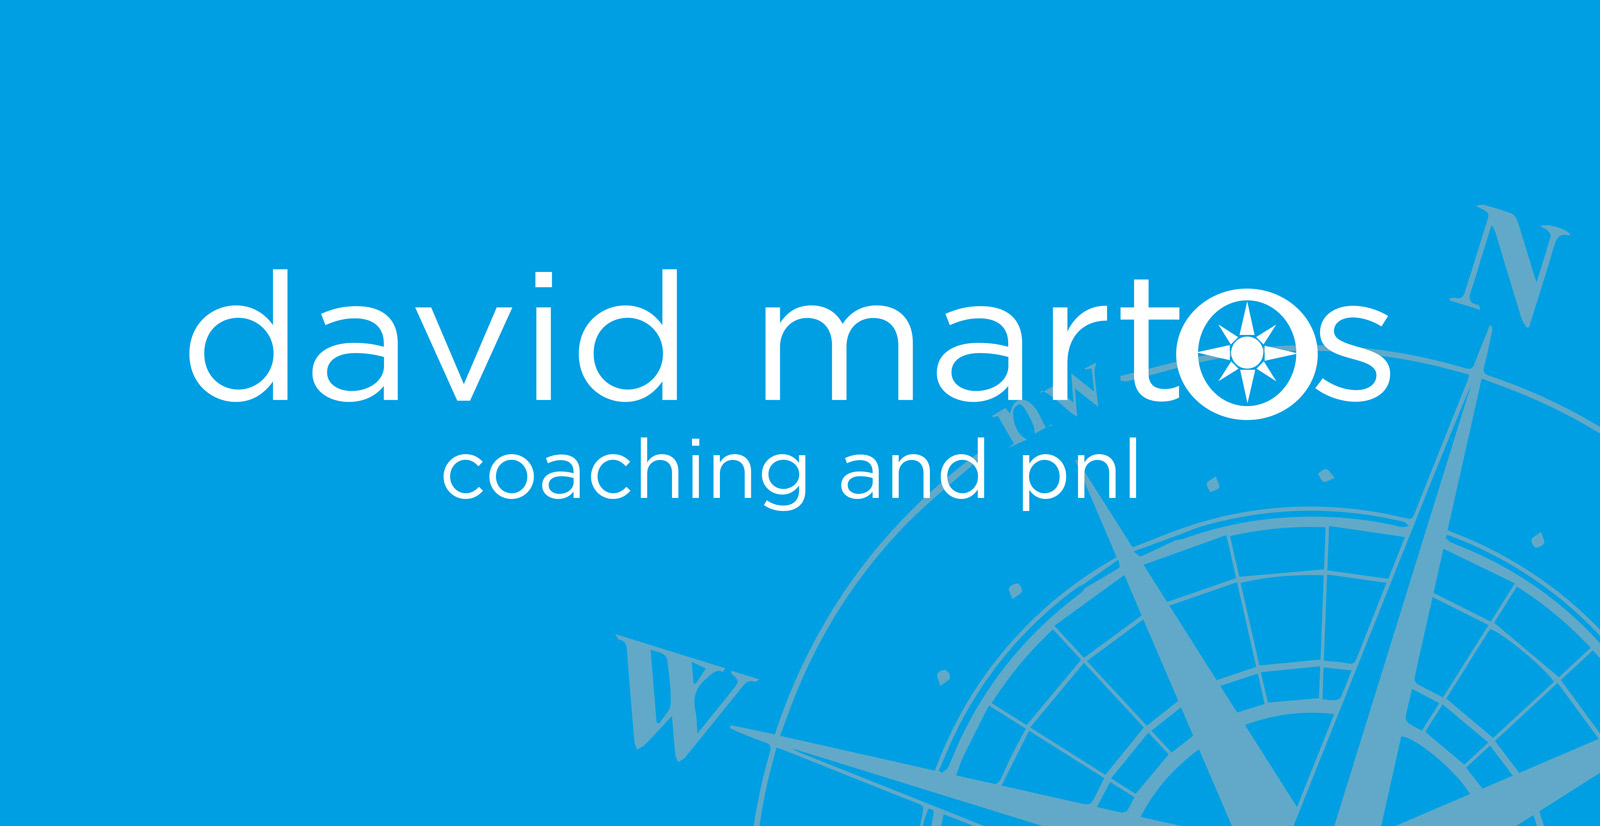 DAVID MARTOS coaching company logo design